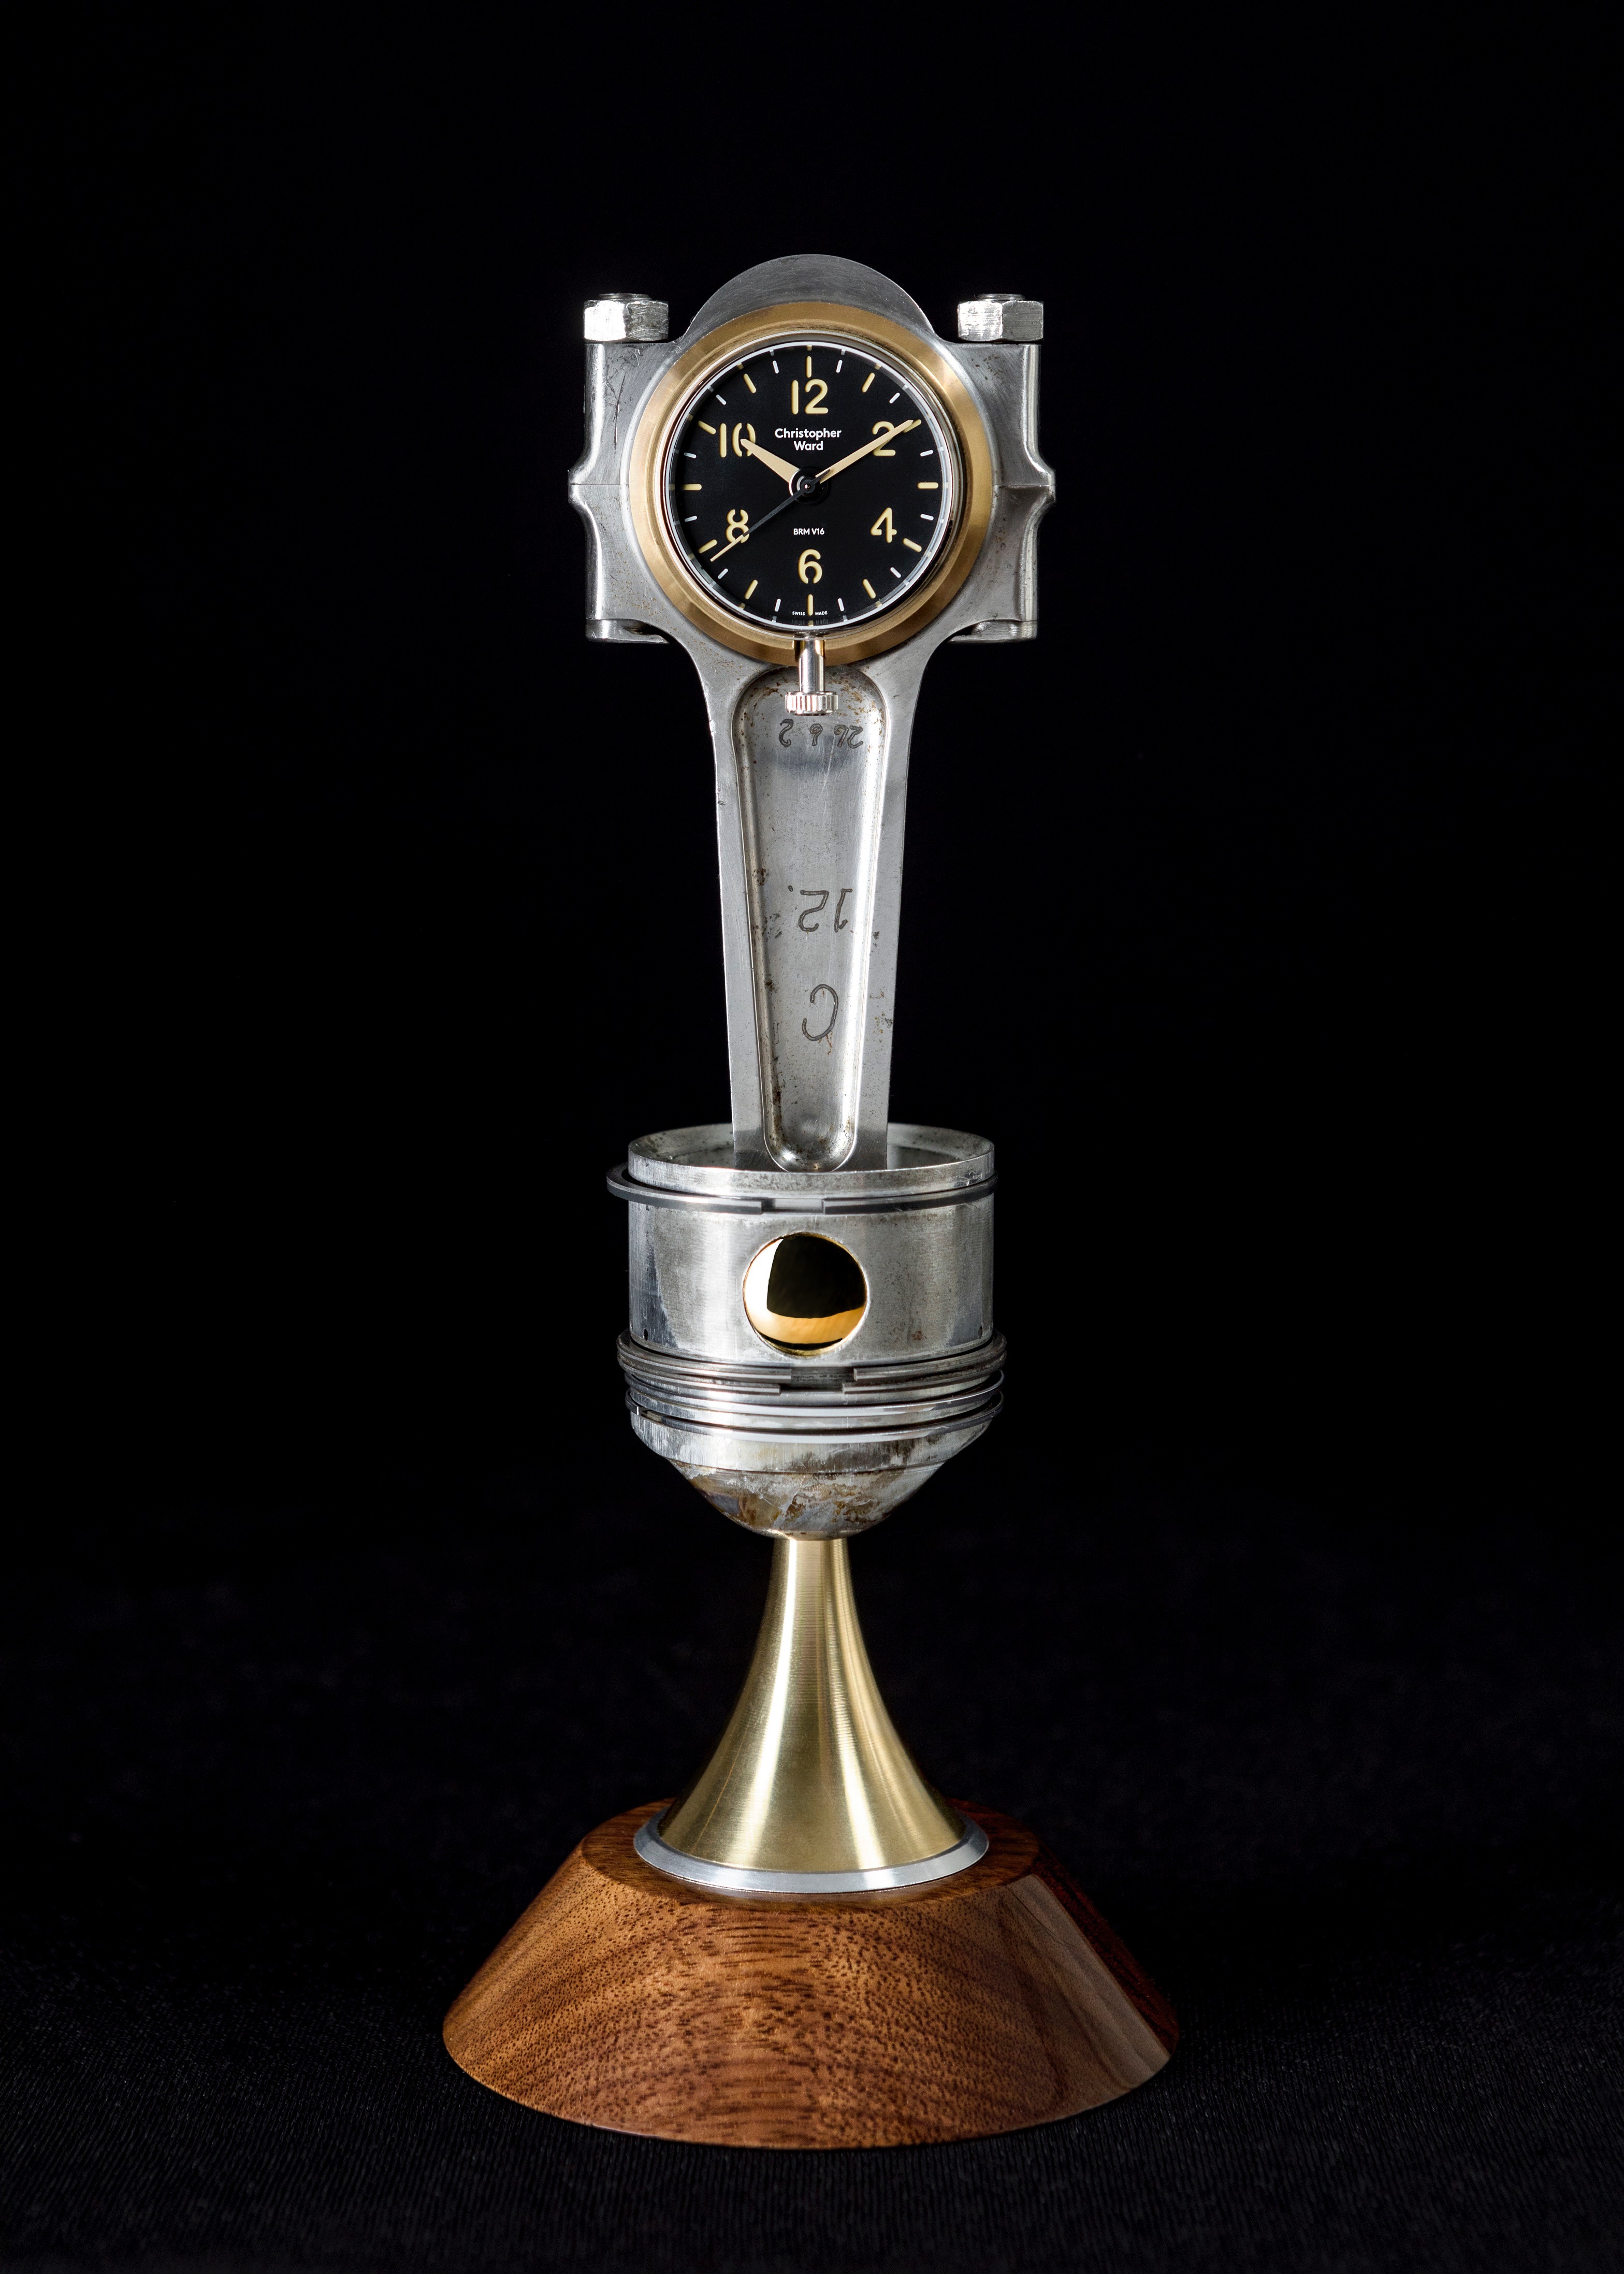 Clock, Time machine: 1950 BRM pistons made into clocks, ClassicCars.com Journal